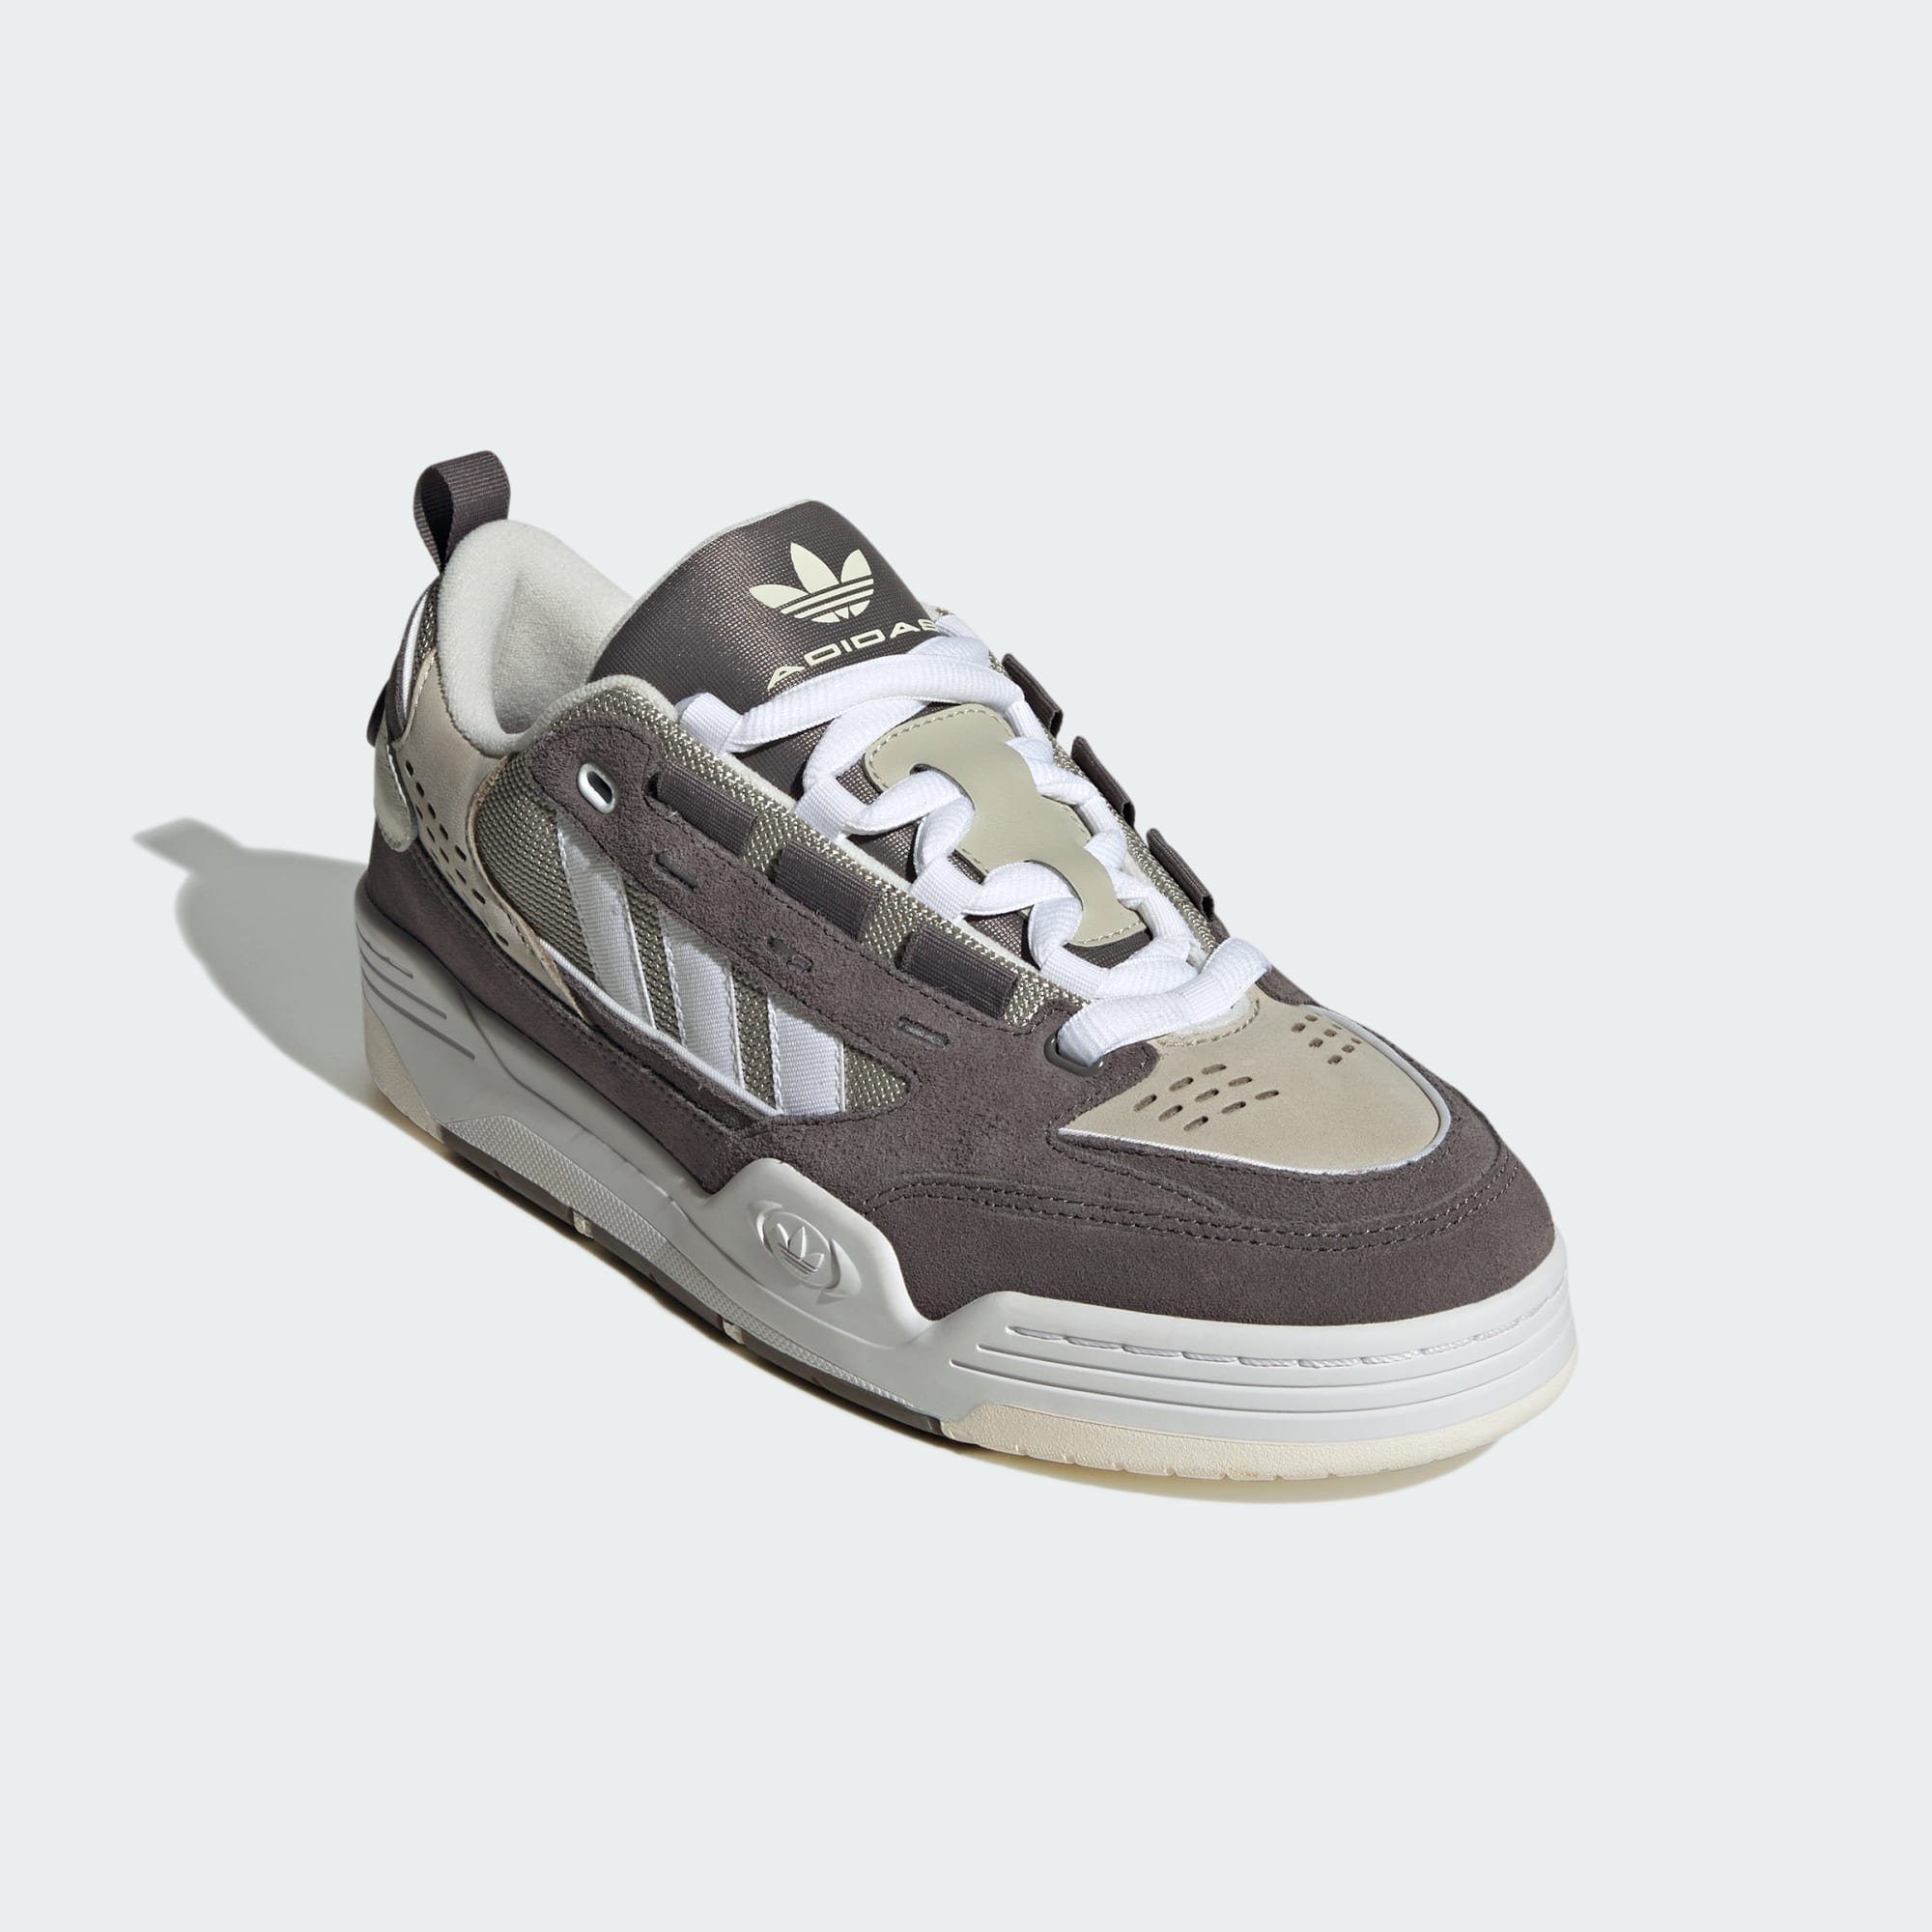 ADI2000 / Originals Cloud White SCHUH Grey Sneaker Putty / Charcoal adidas